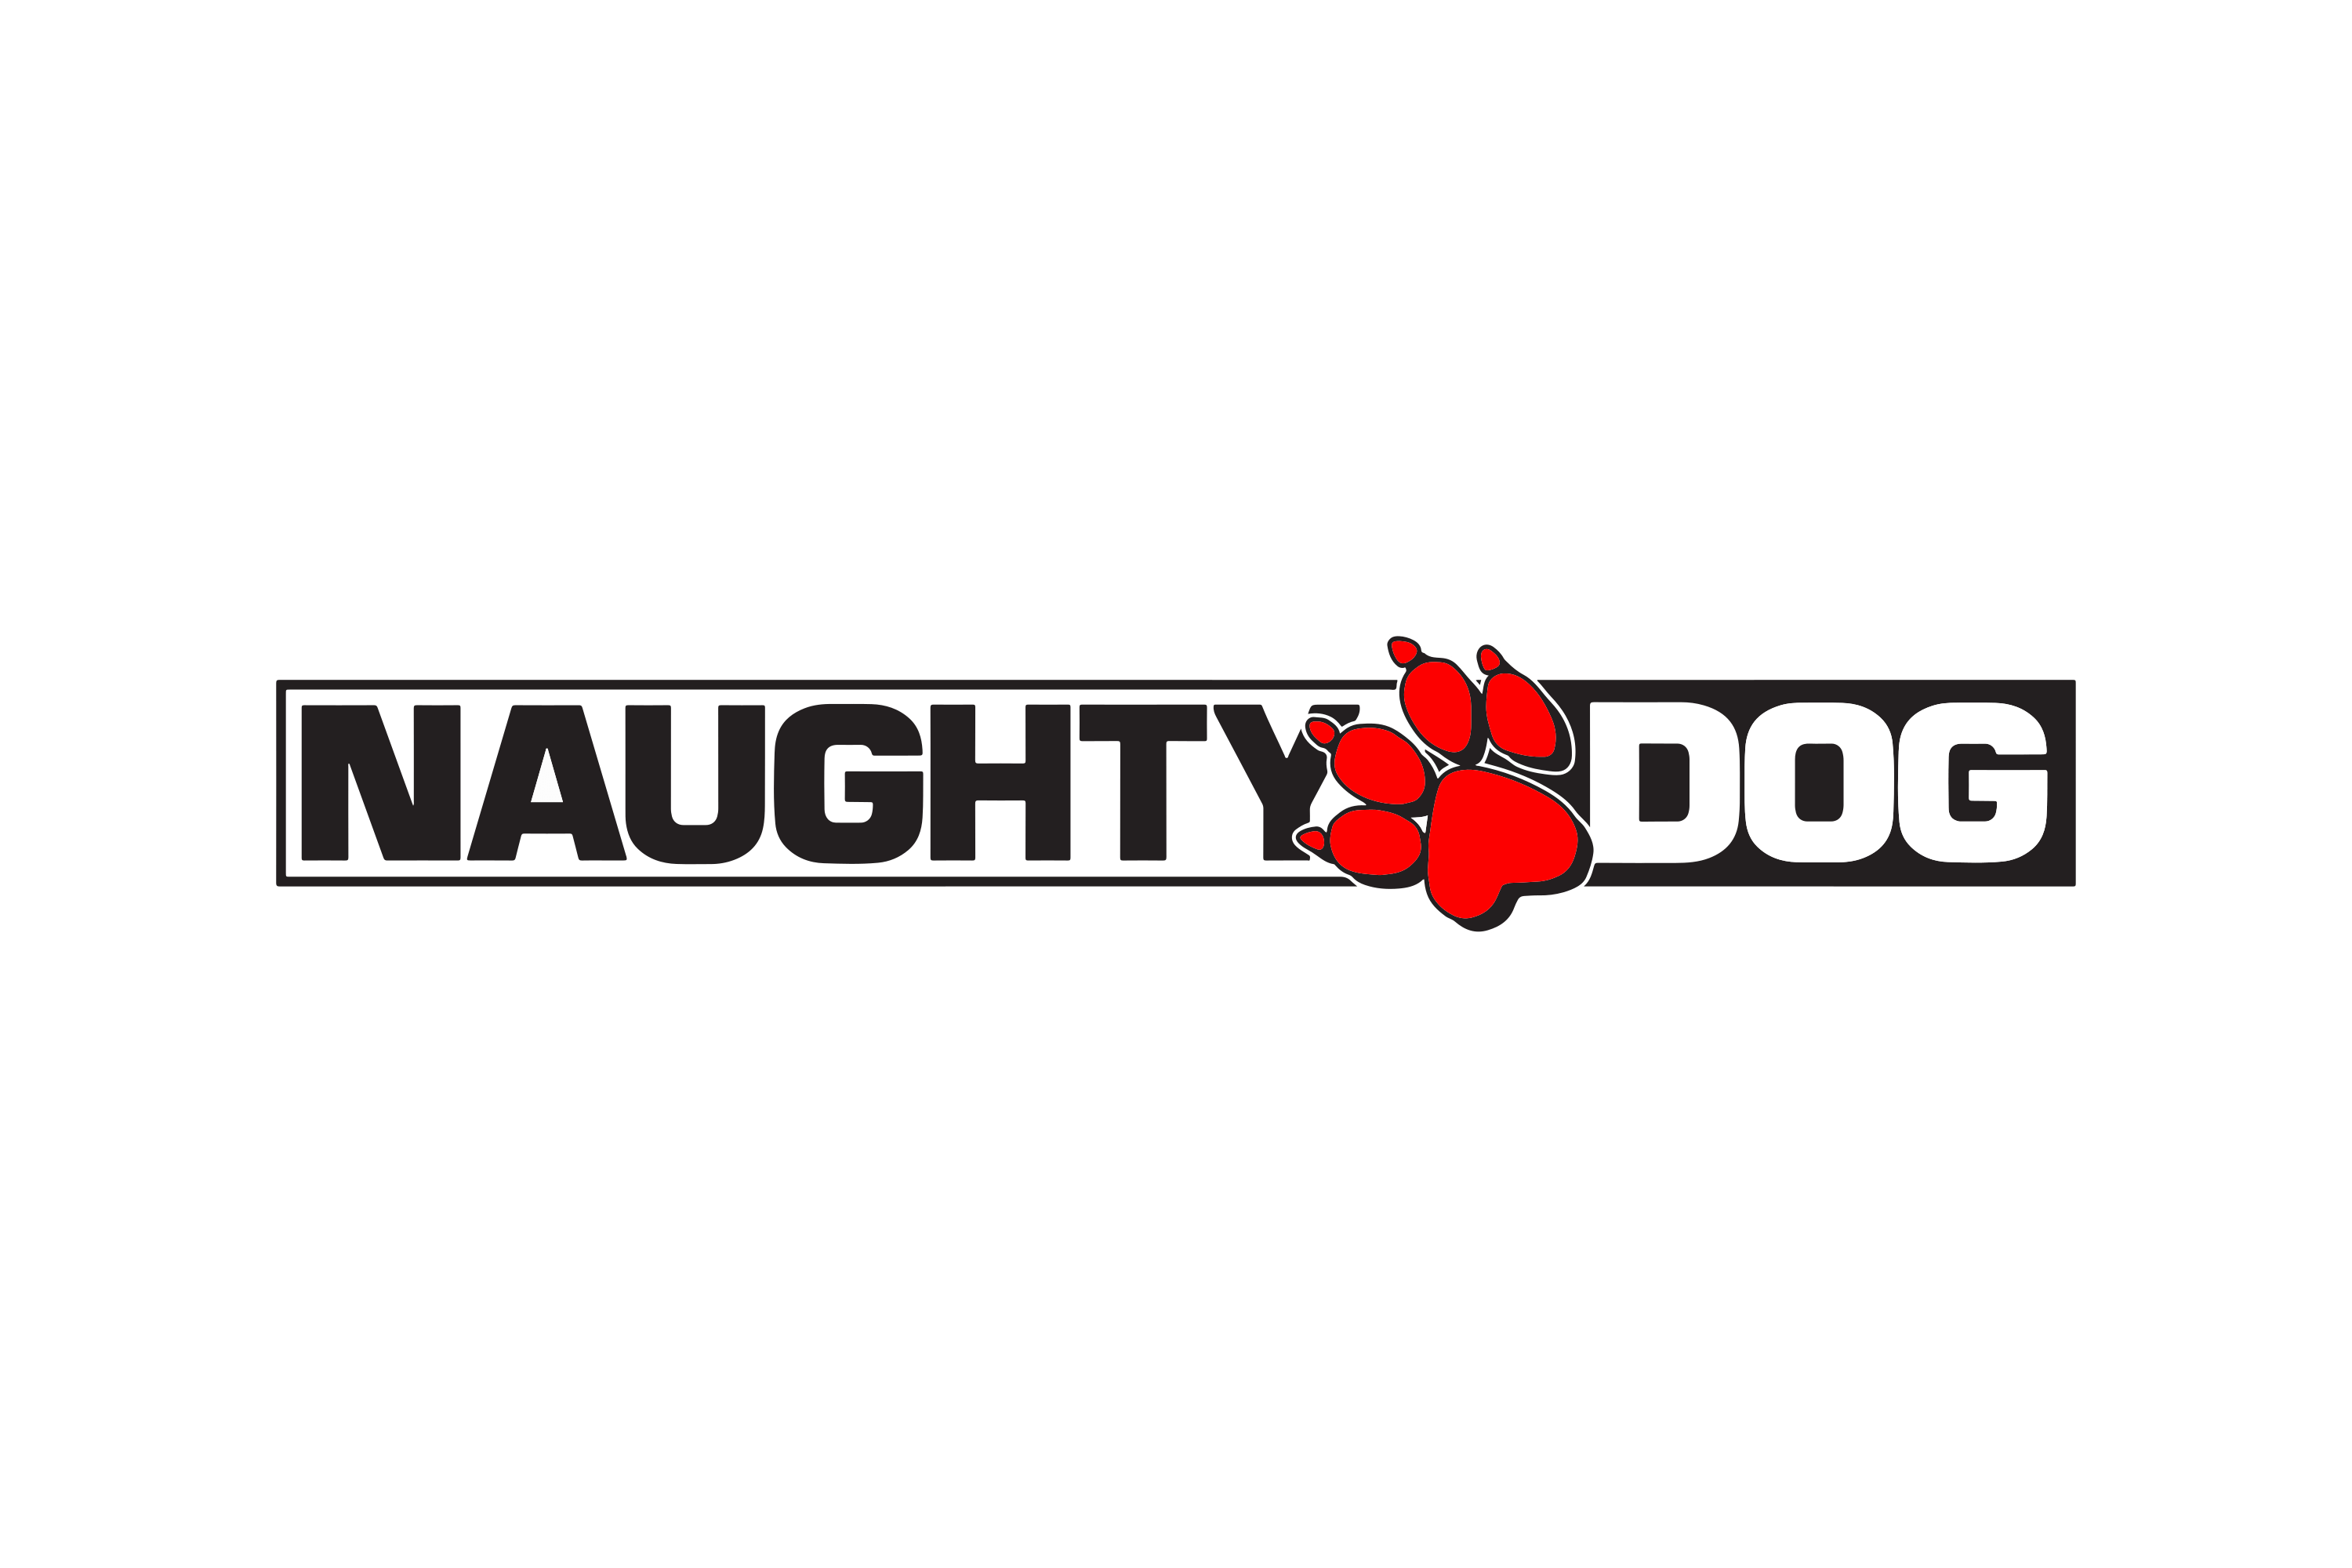 Download Naughty Dog Logo symbol in PNG format. 